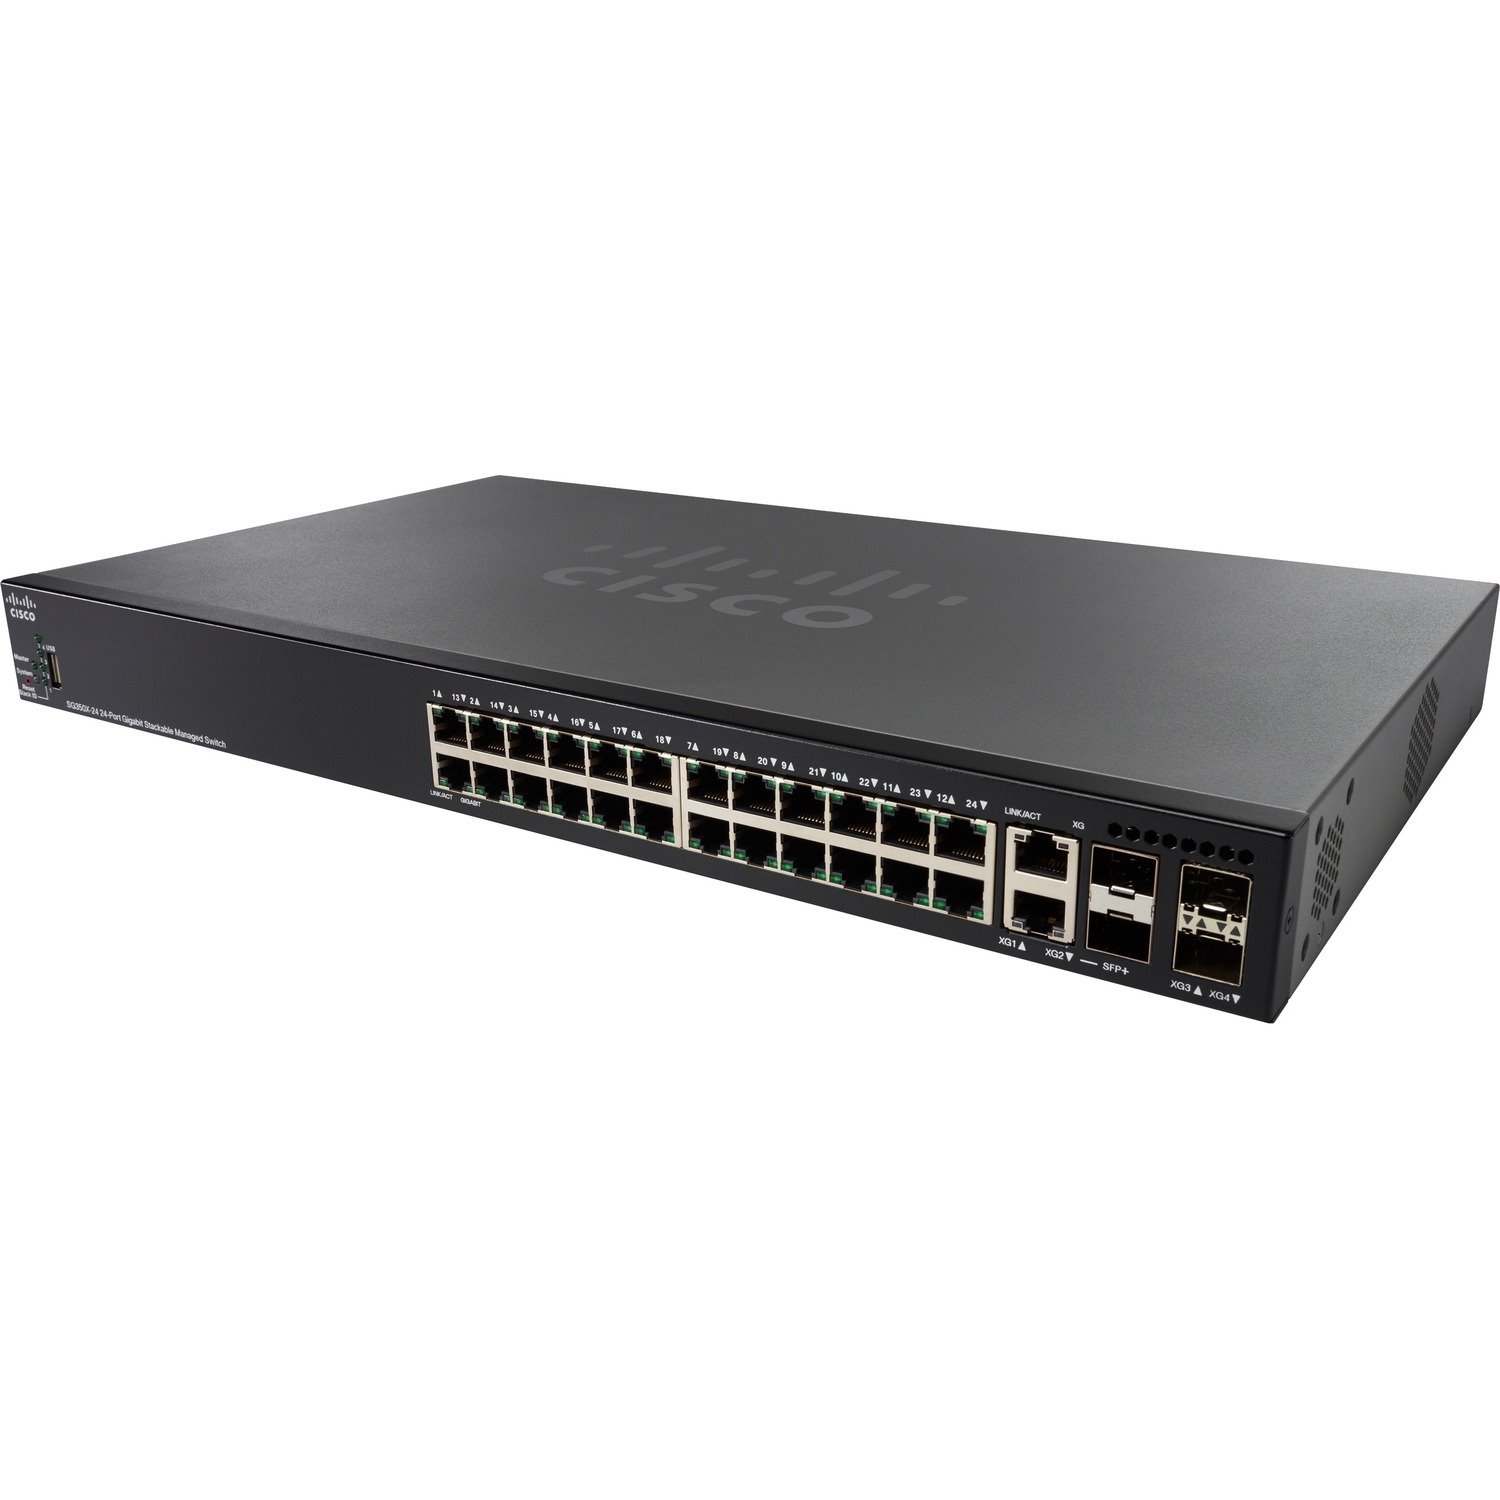 Cisco SG350X-24MP Layer 3 Switch